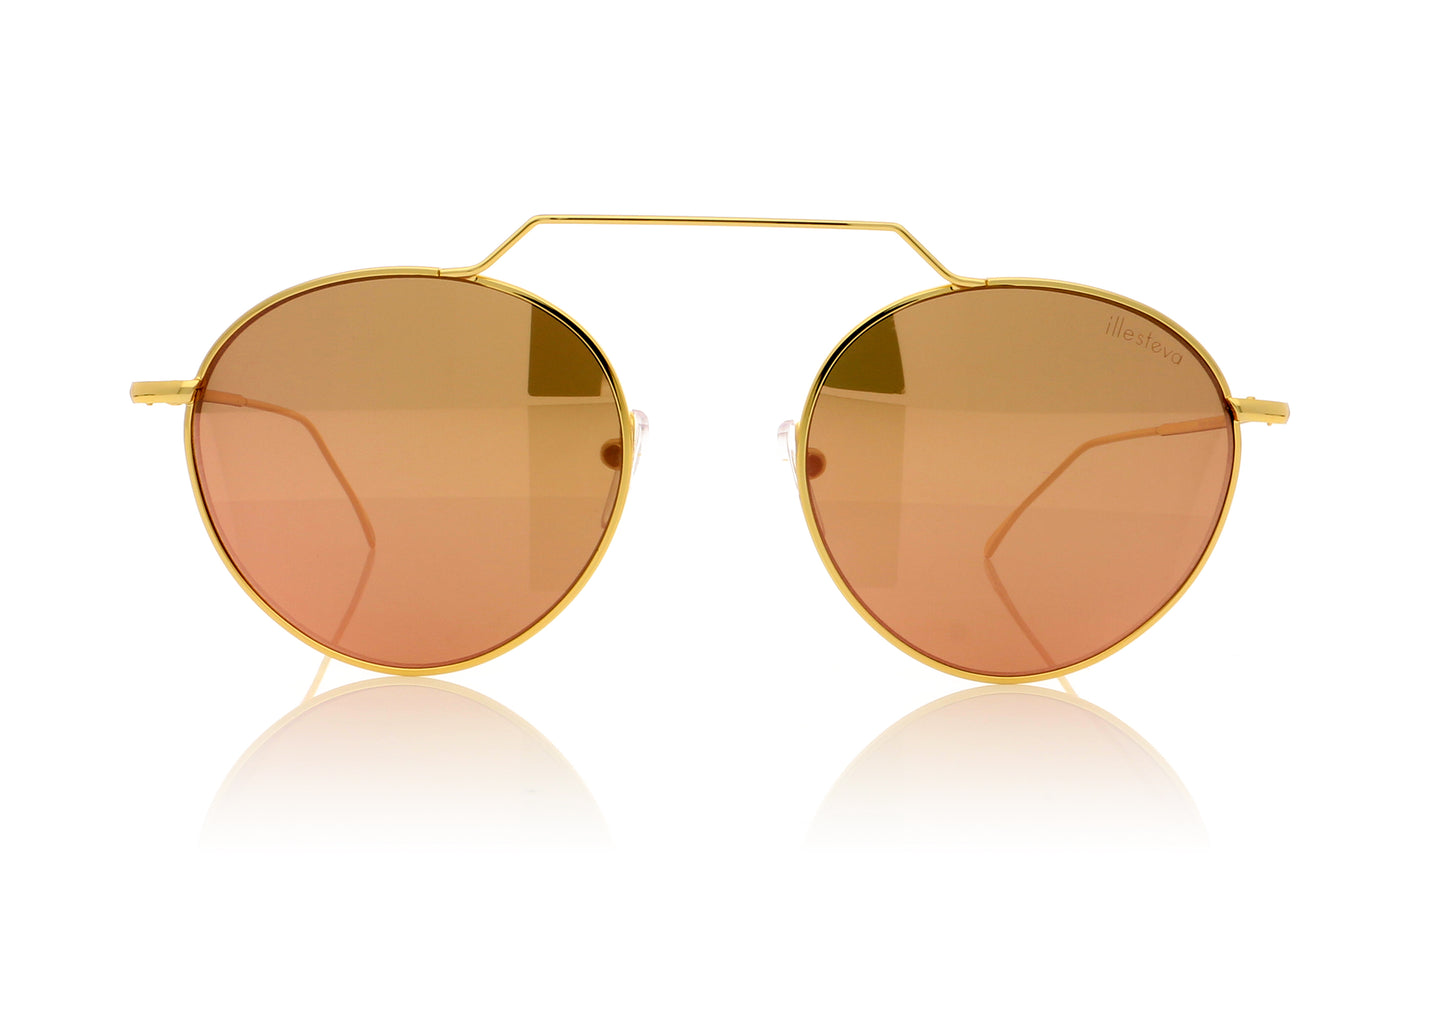 Illesteva Wynwood 2 7 Gold Sunglasses - Front